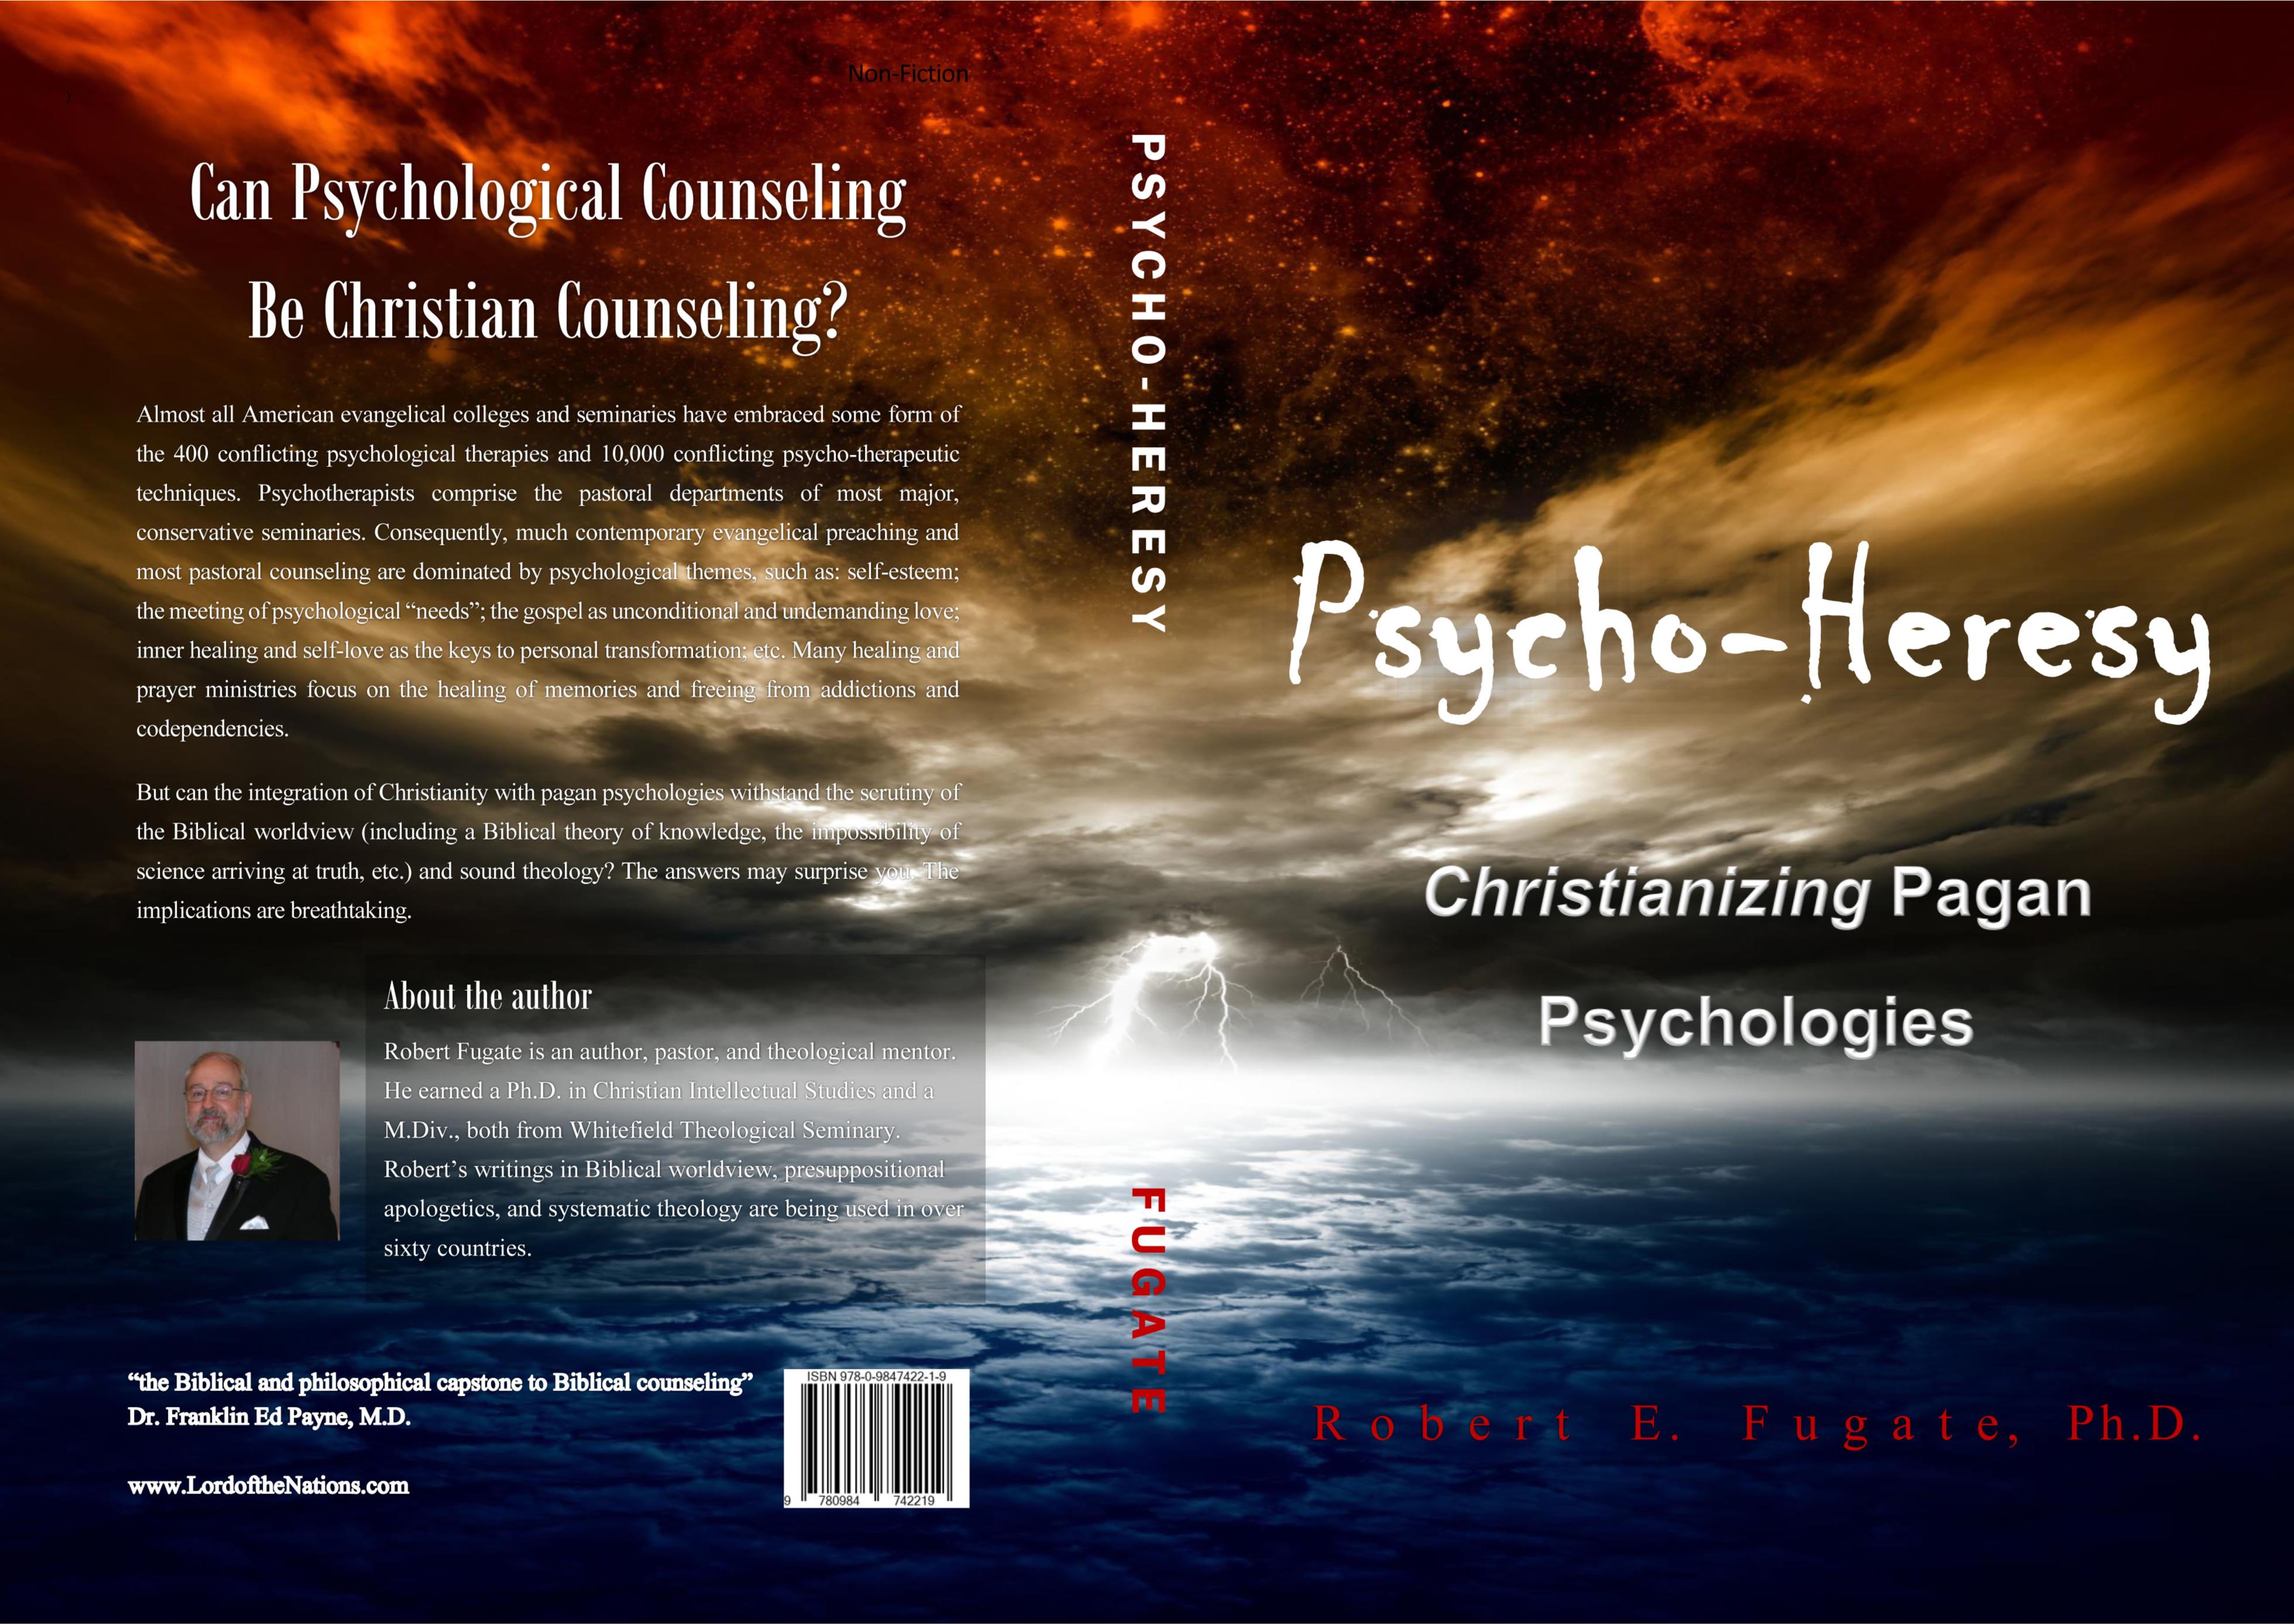 Psycho-Heresy: Christianizing Pagan Psychologies cover image